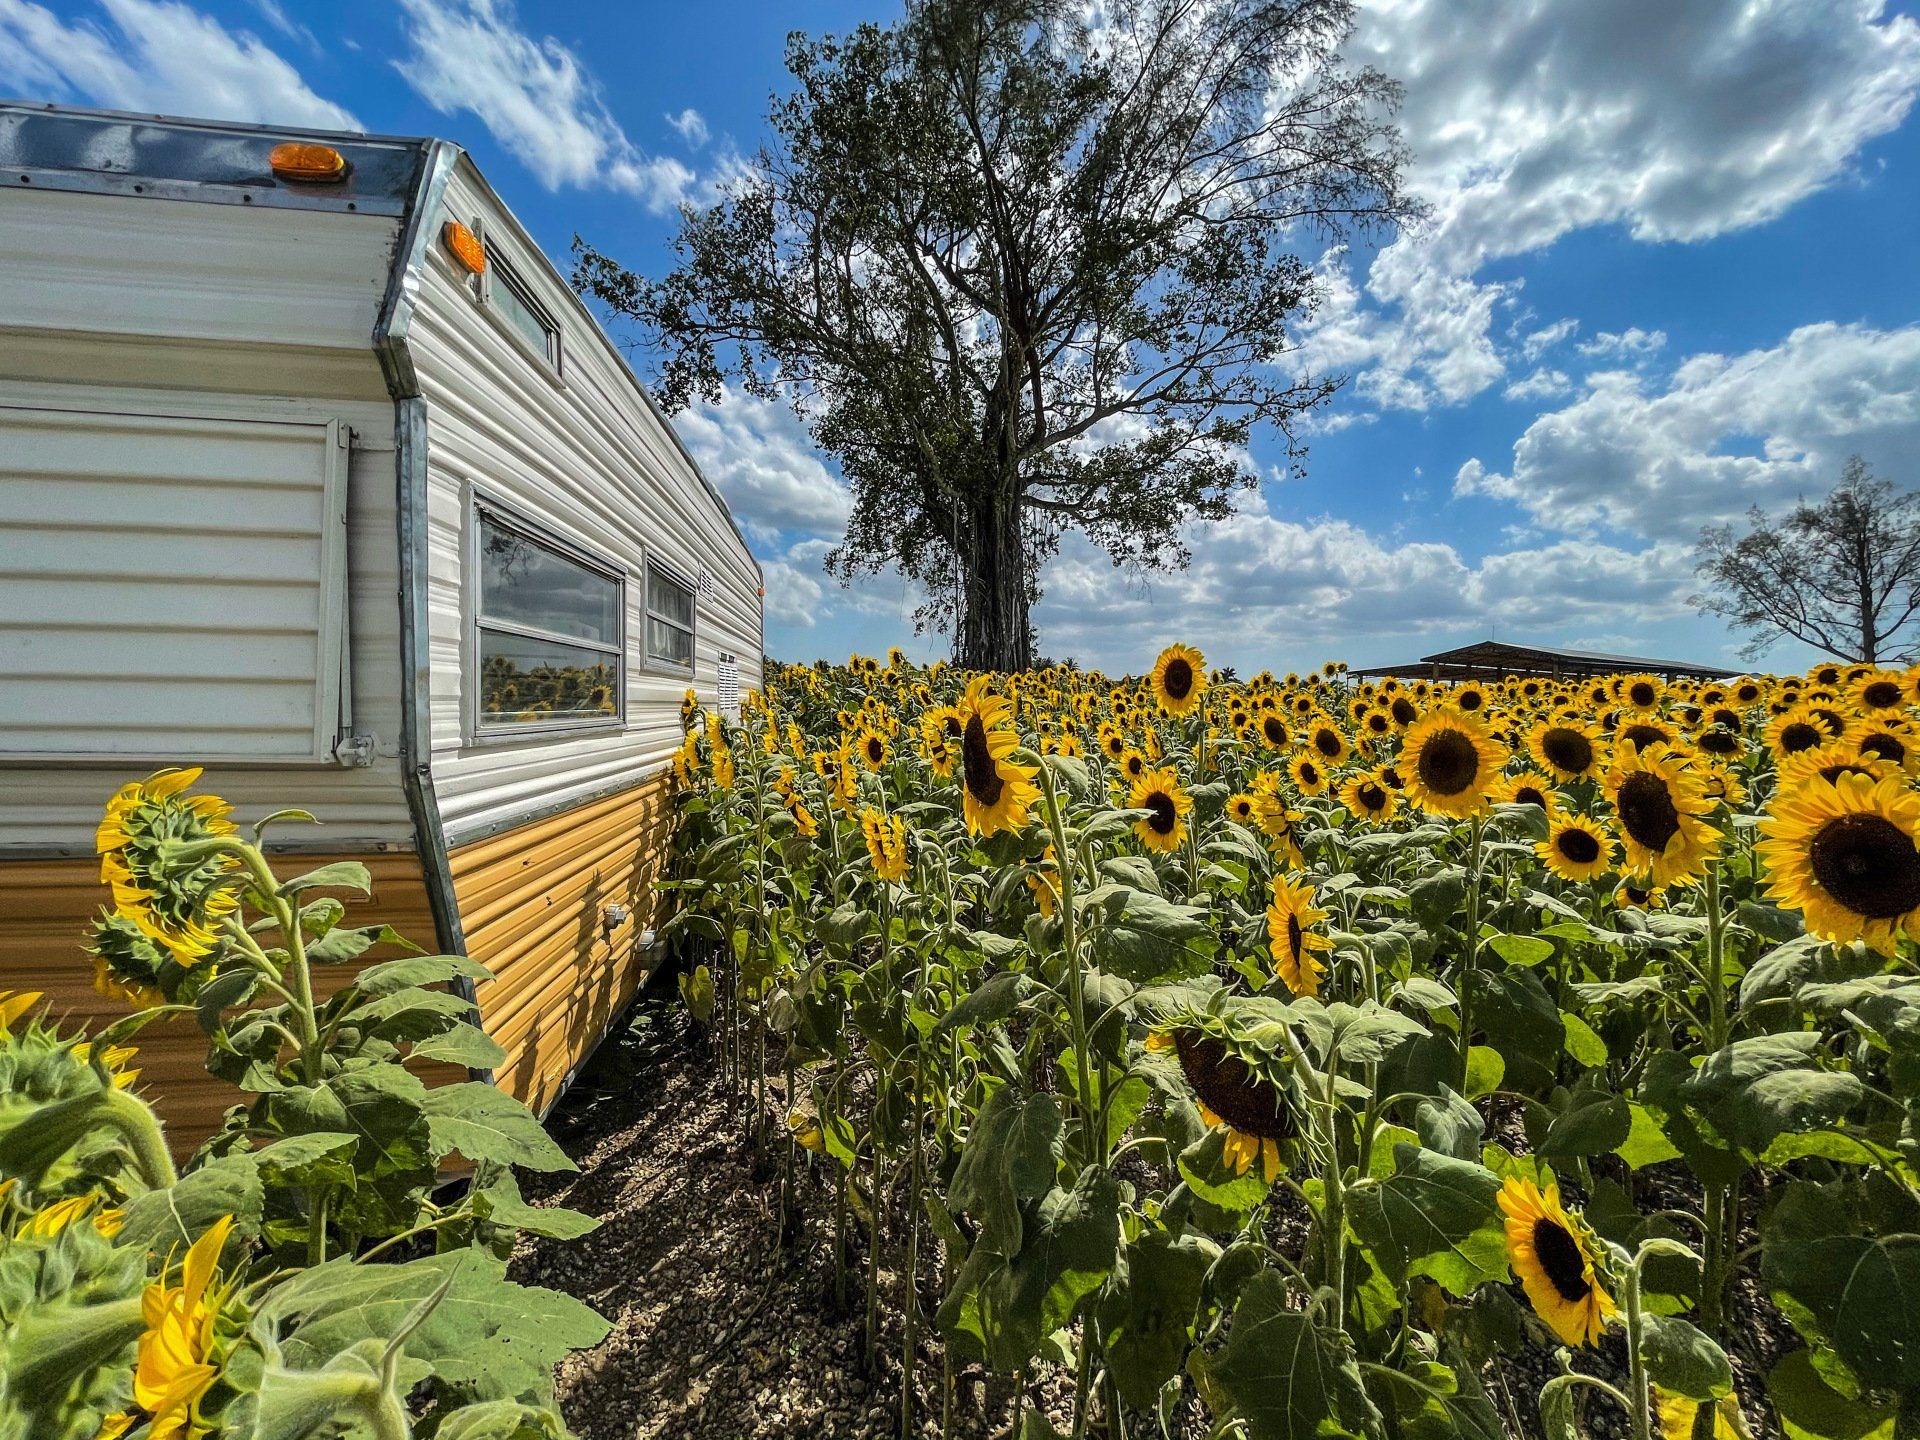 Sunflowers • Homestead • Florida, azalia molina, fotografia